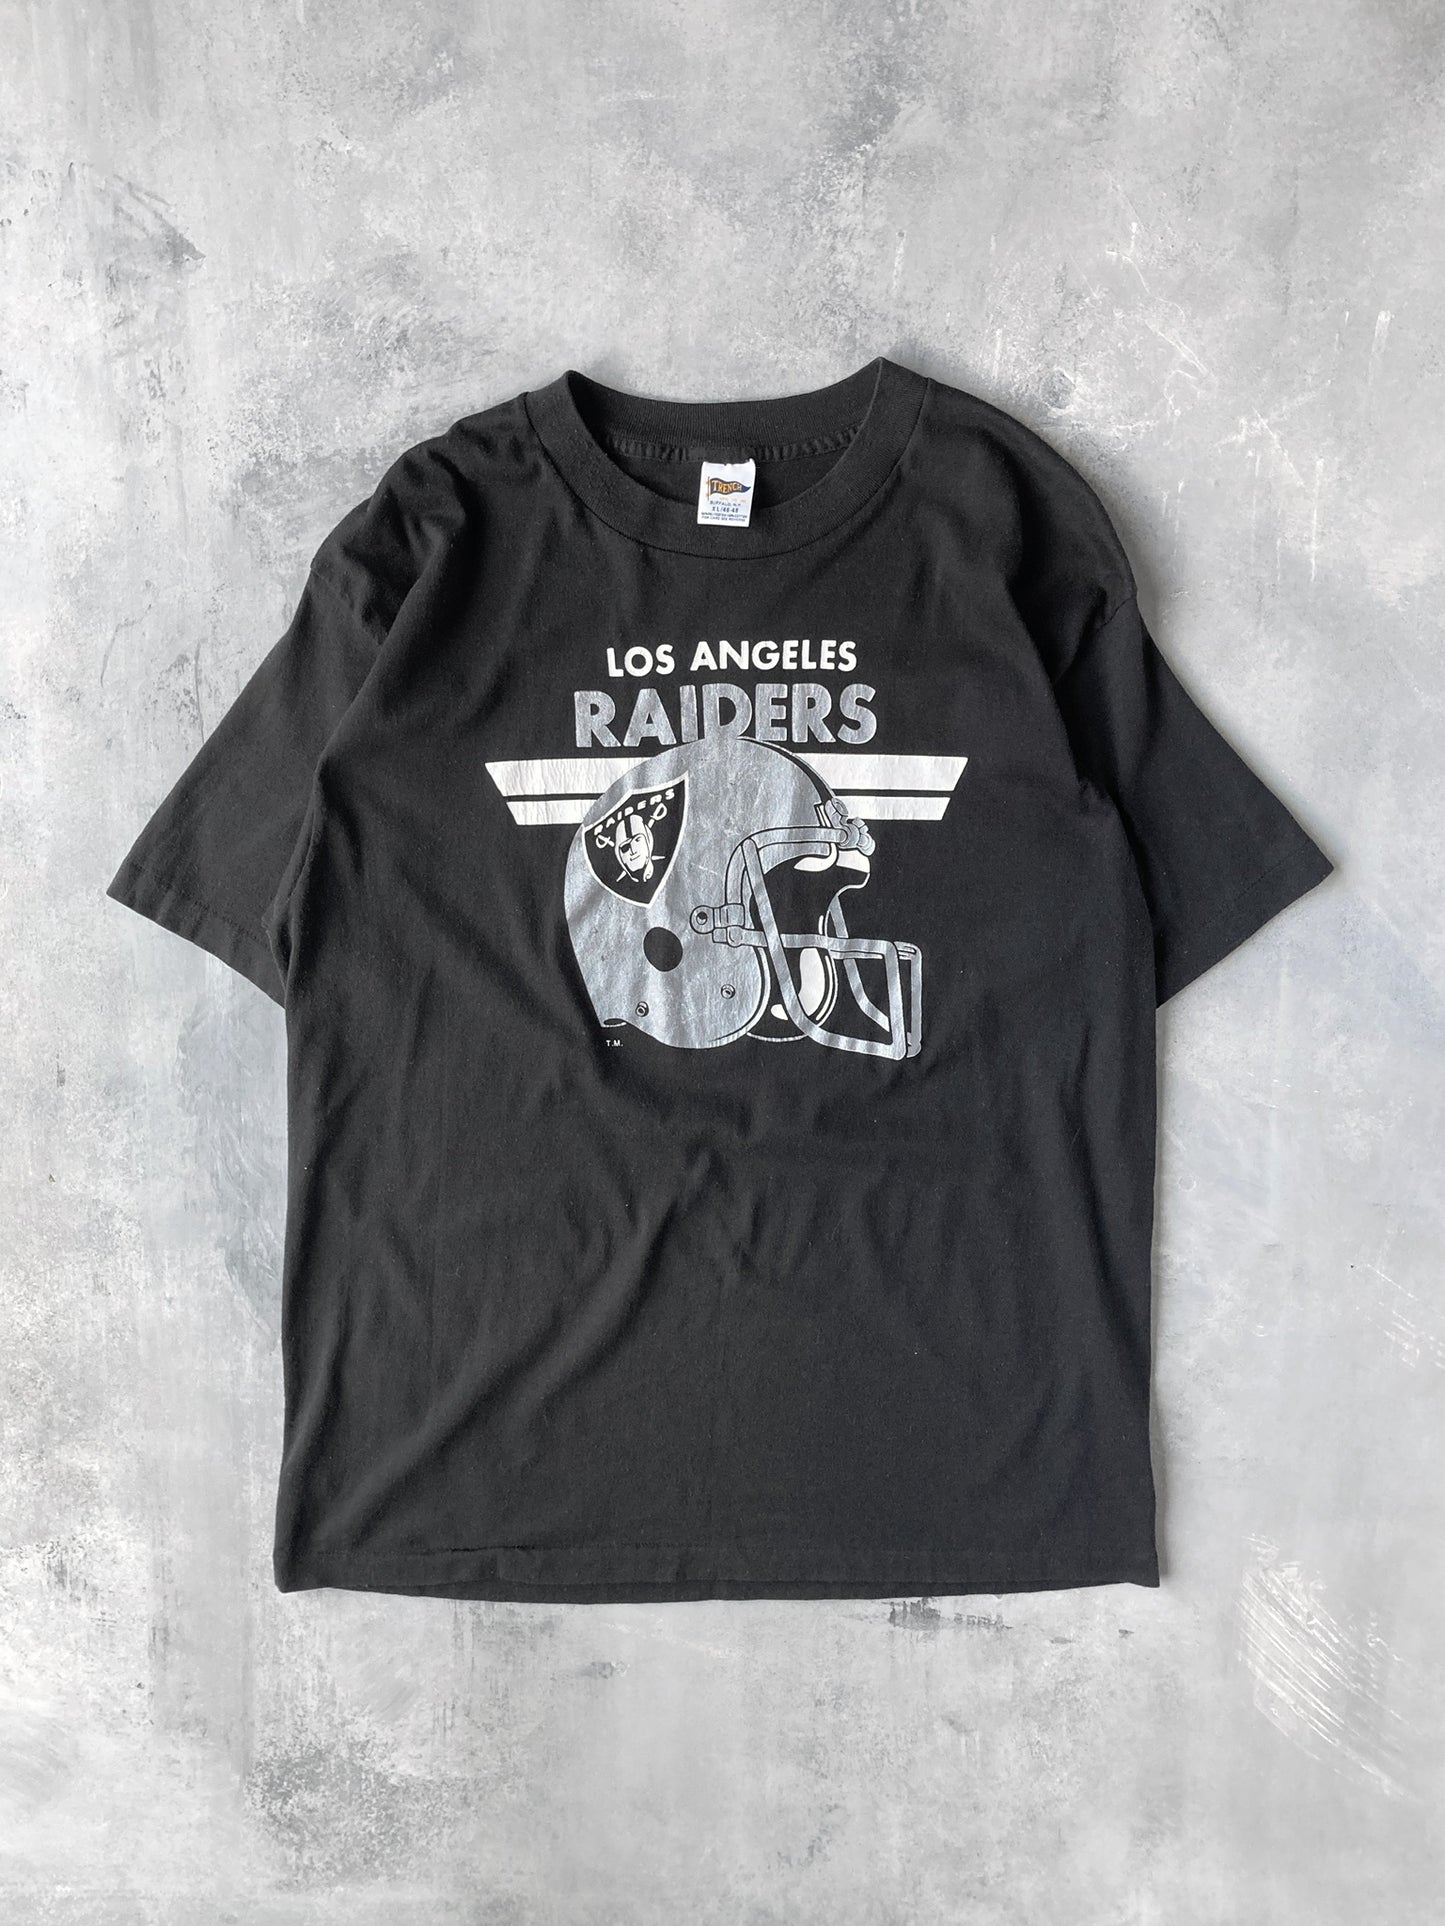 Raiders T-Shirt 90's - Large